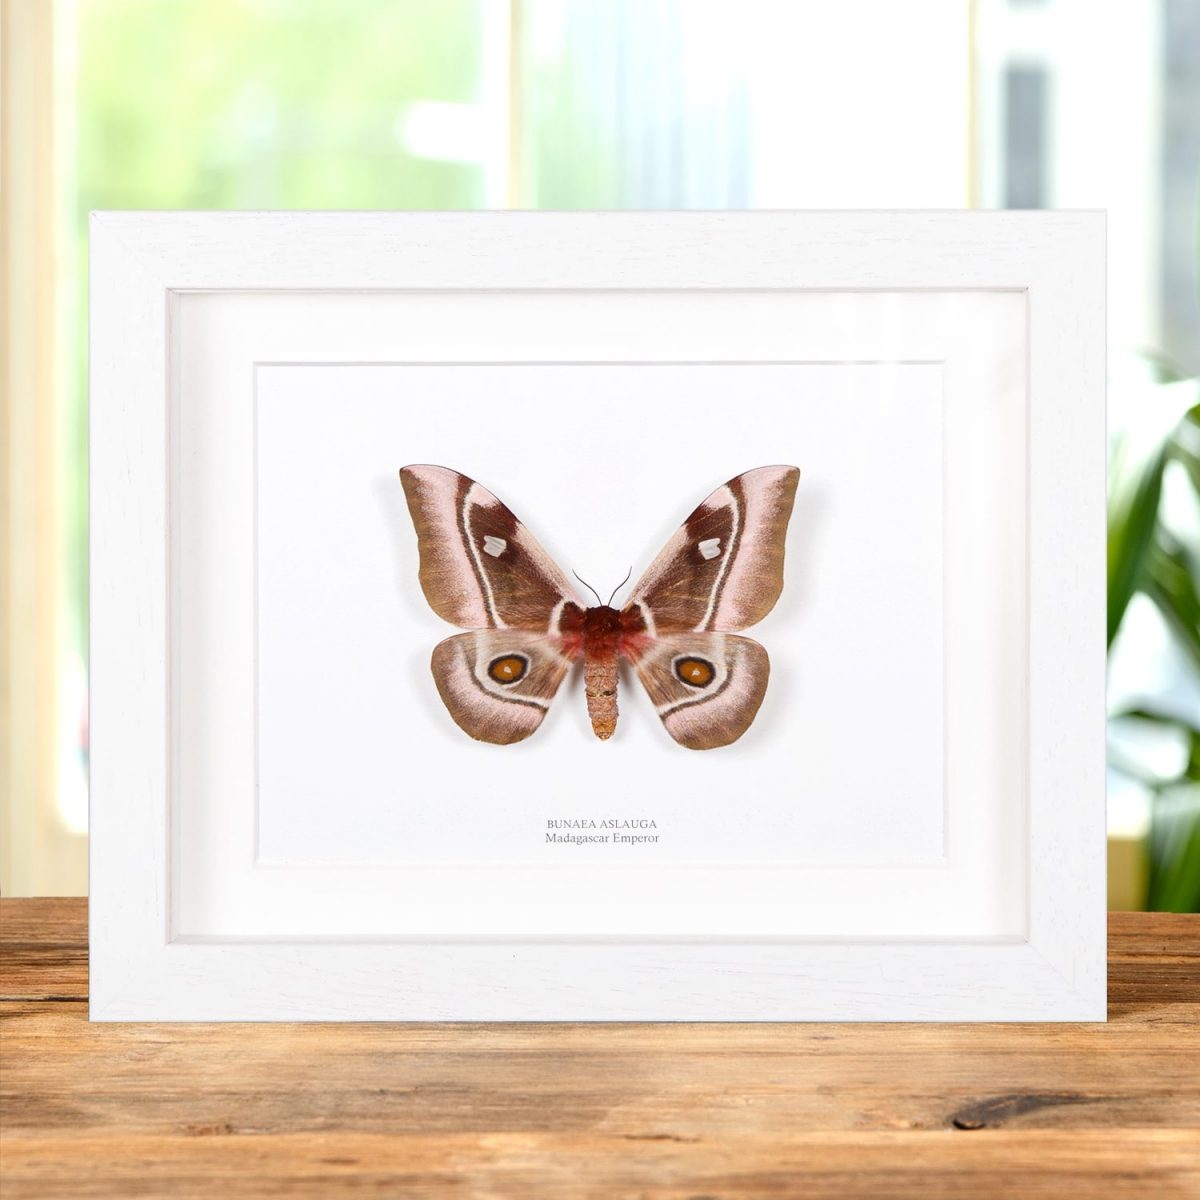 Madagascar Emperor moth in Box Frame (Bunaea aslauga)